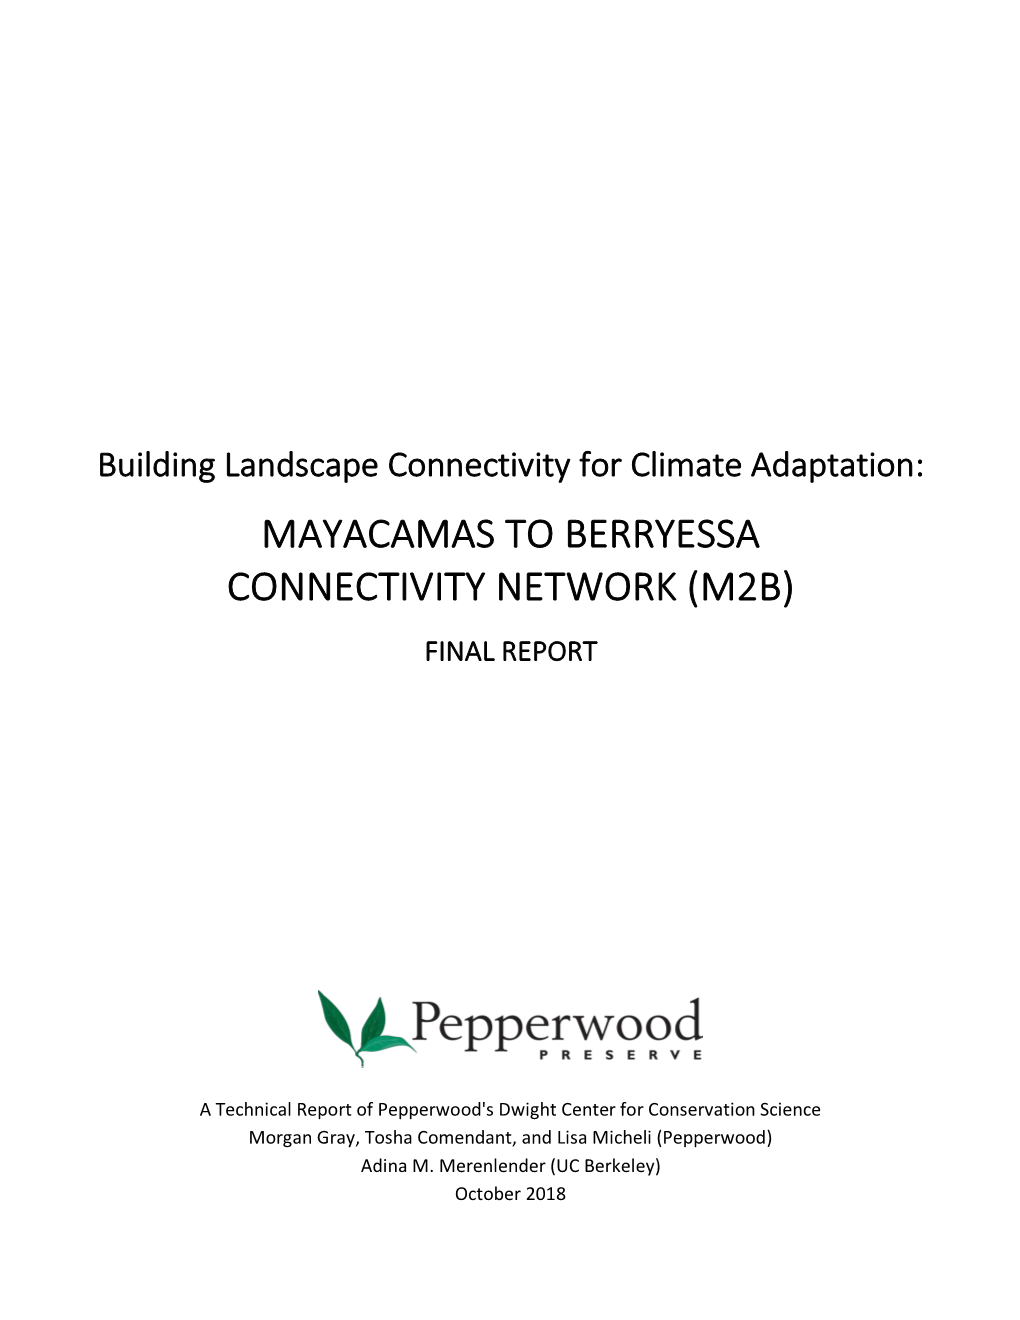 Mayacamas to Berryessa Connectivity Network (M2b) Final Report